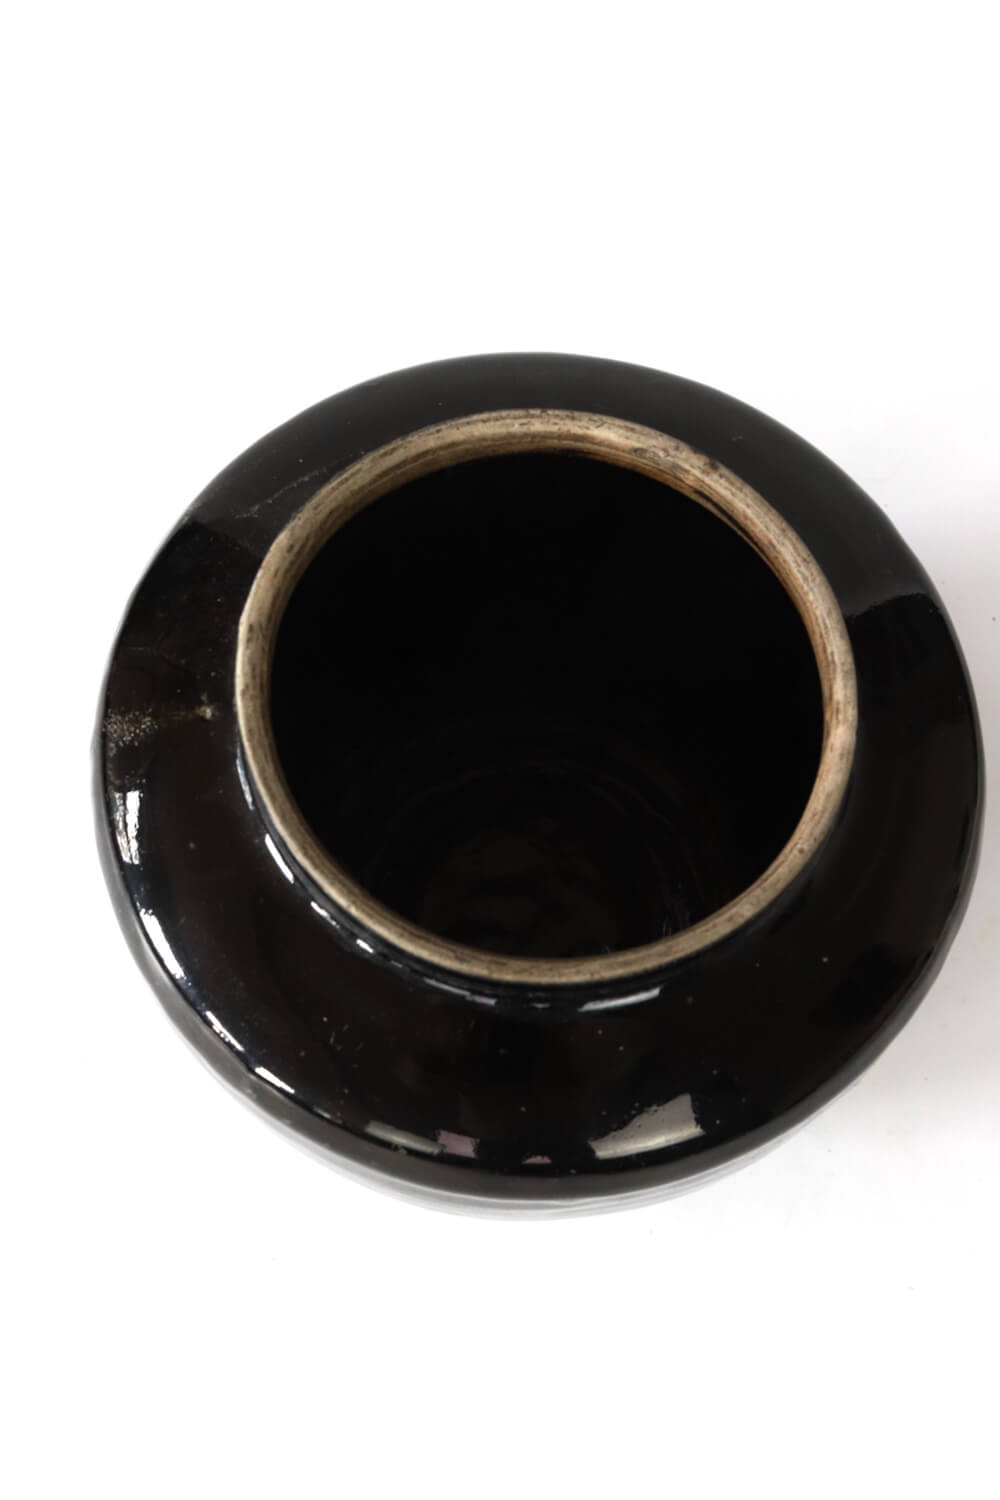 Alte Keramik Vase China 22xø21